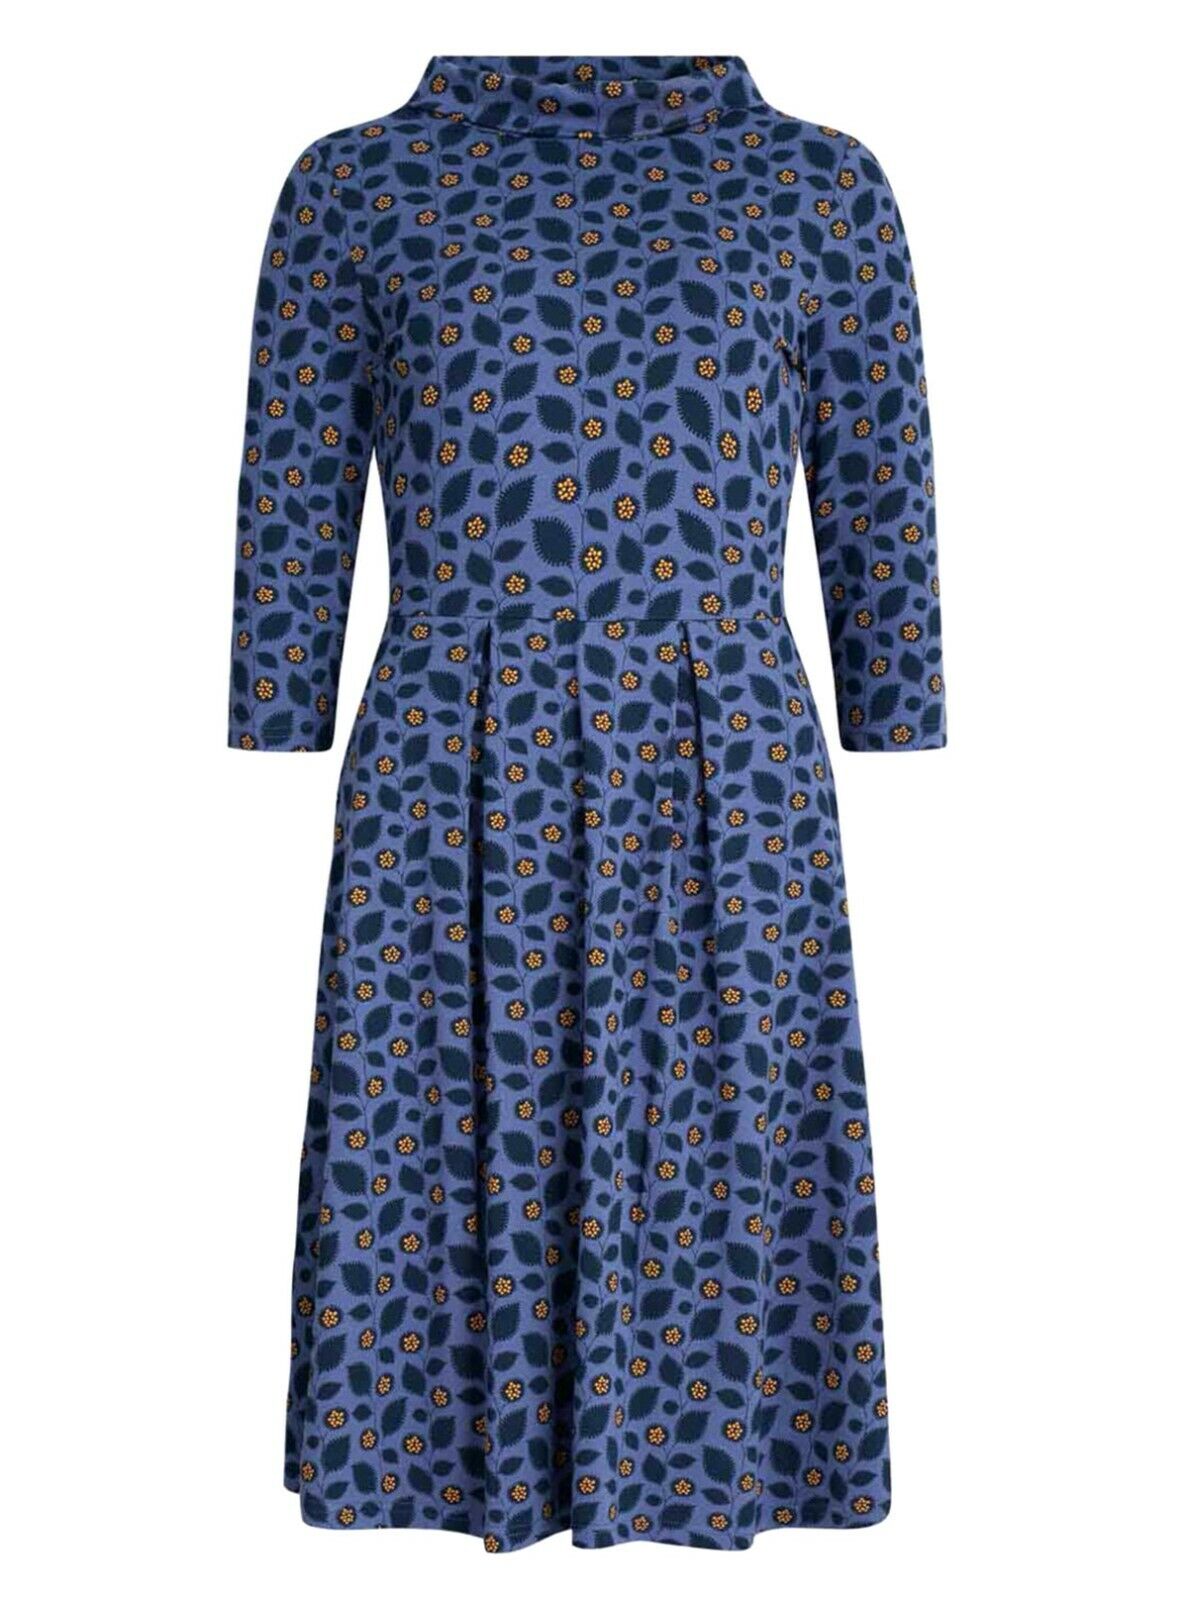 SEASALT Blue Embossed Flower Wild Pansy Carn Morval Dress Sizes 8-20 RRP £59.95